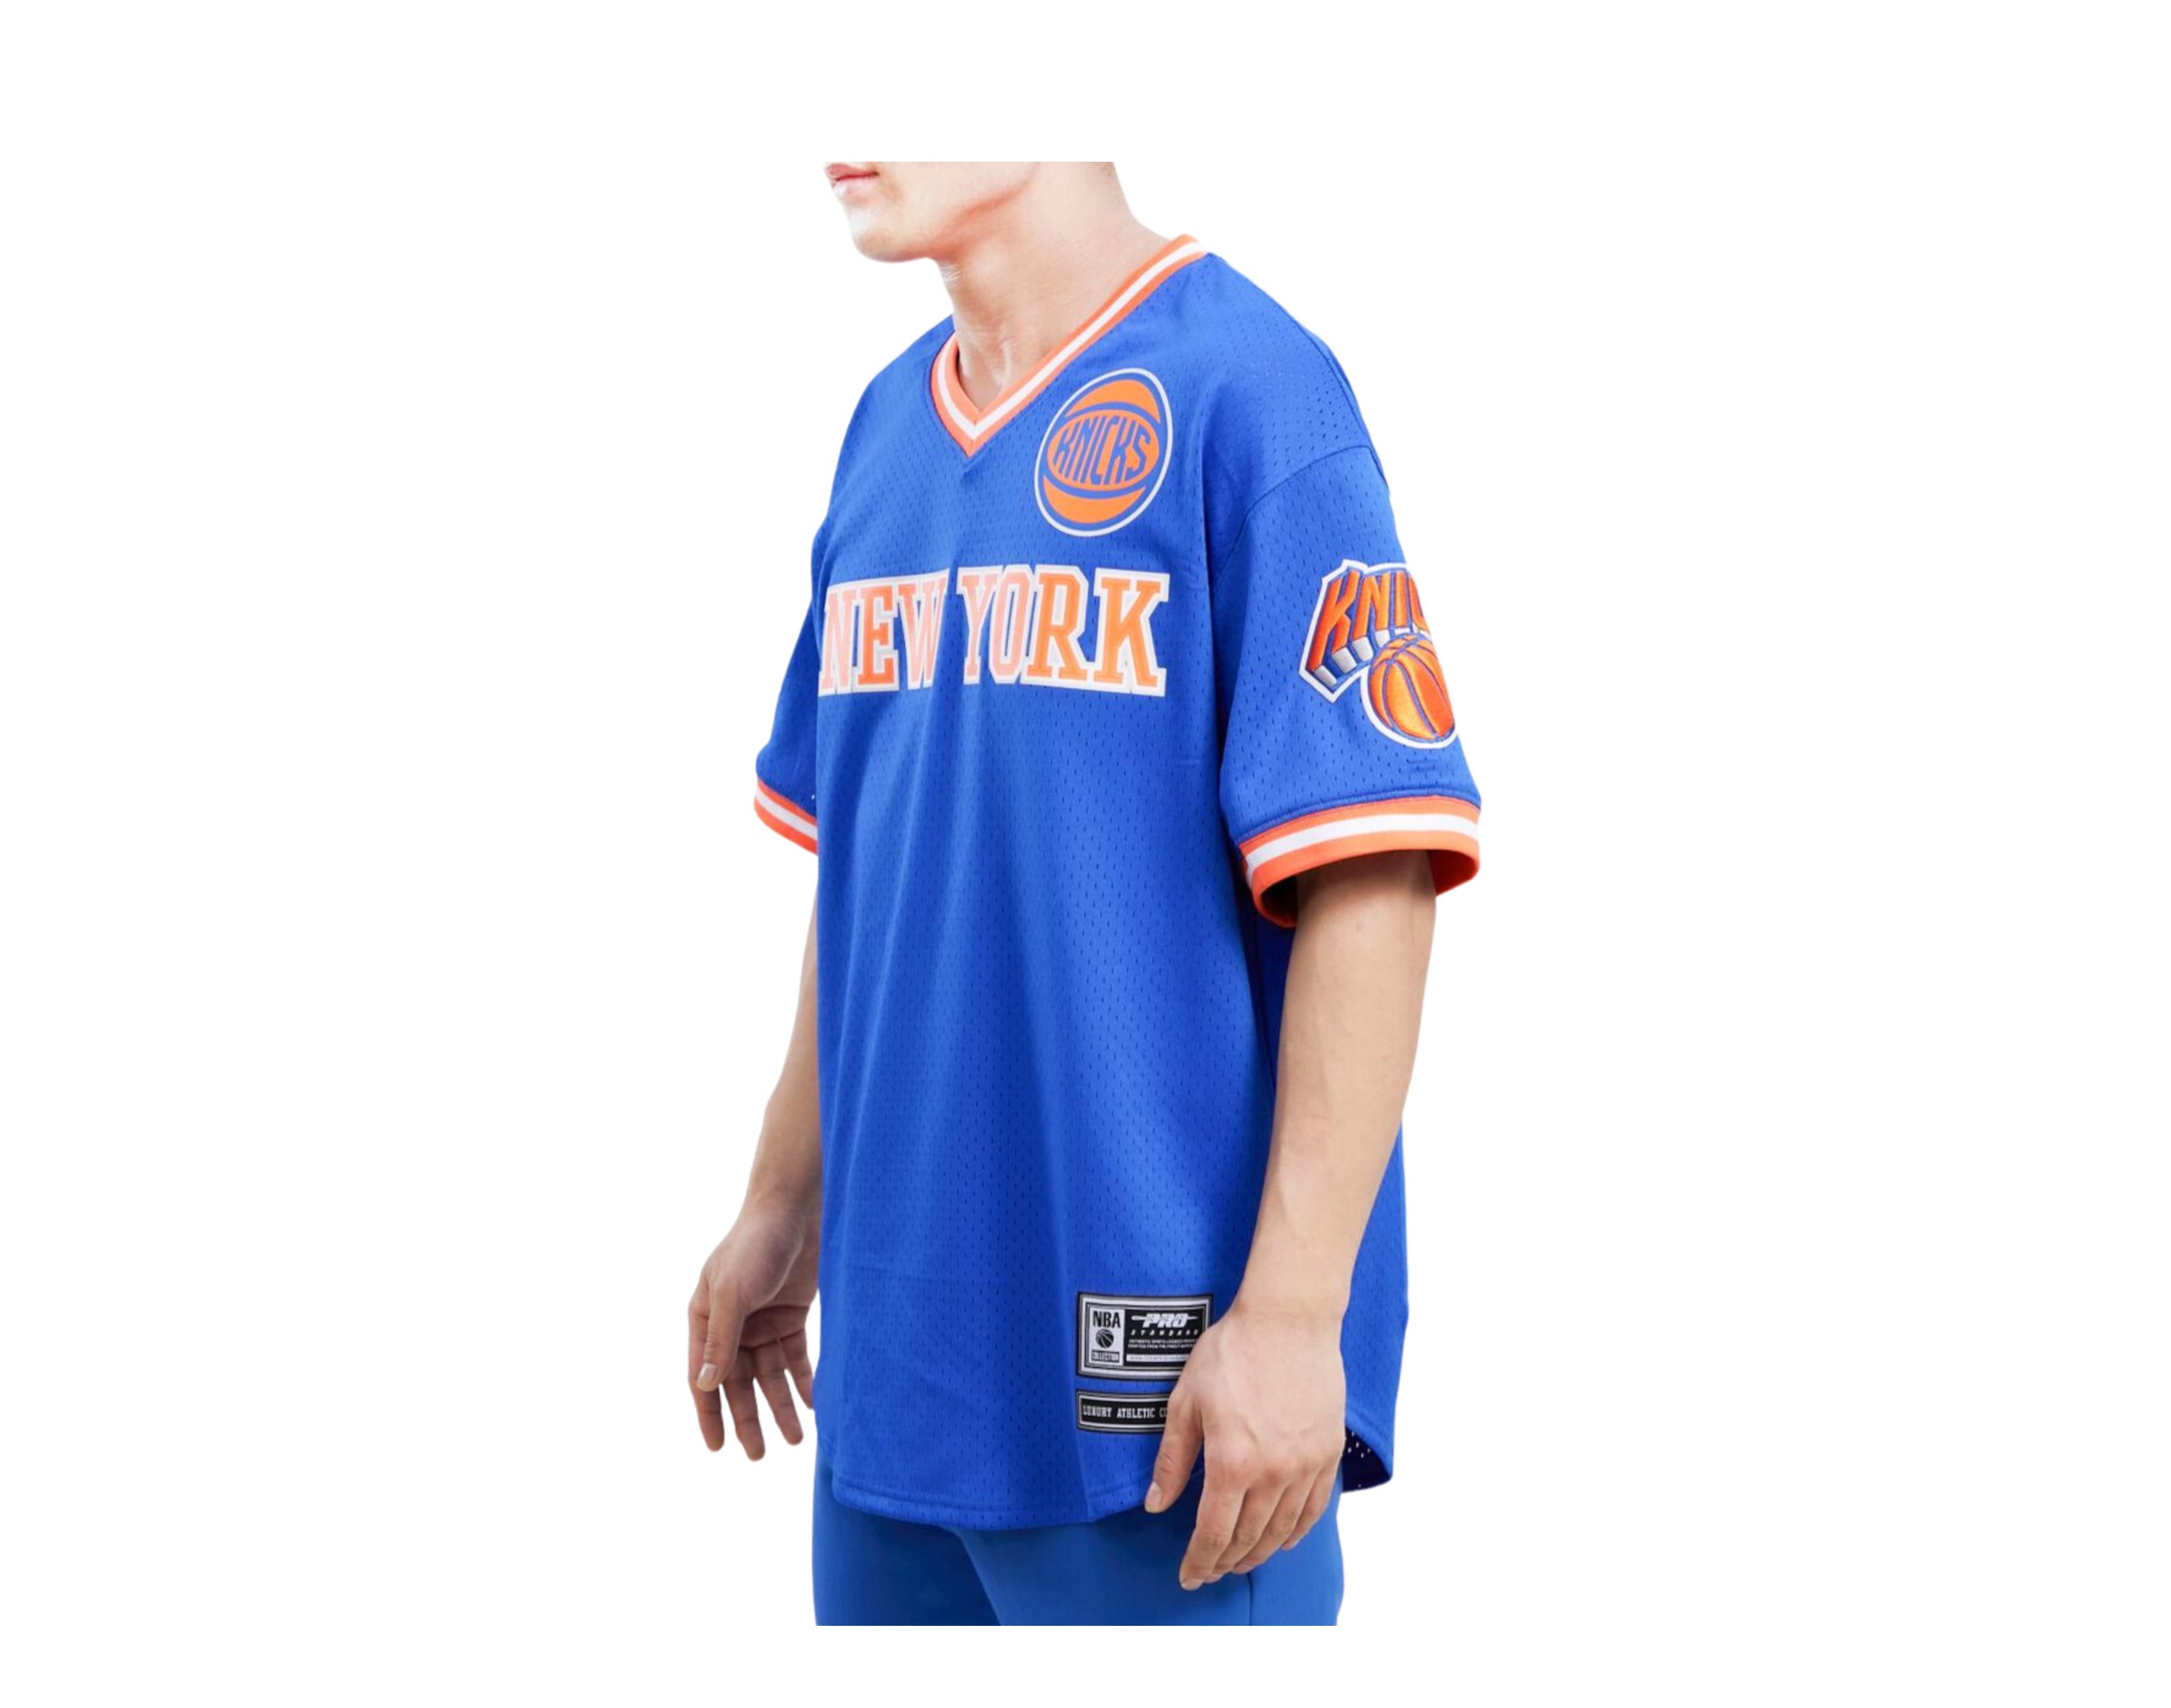 Mitchell & Ness Nba New York Knicks Baseball Jersey in Blue for